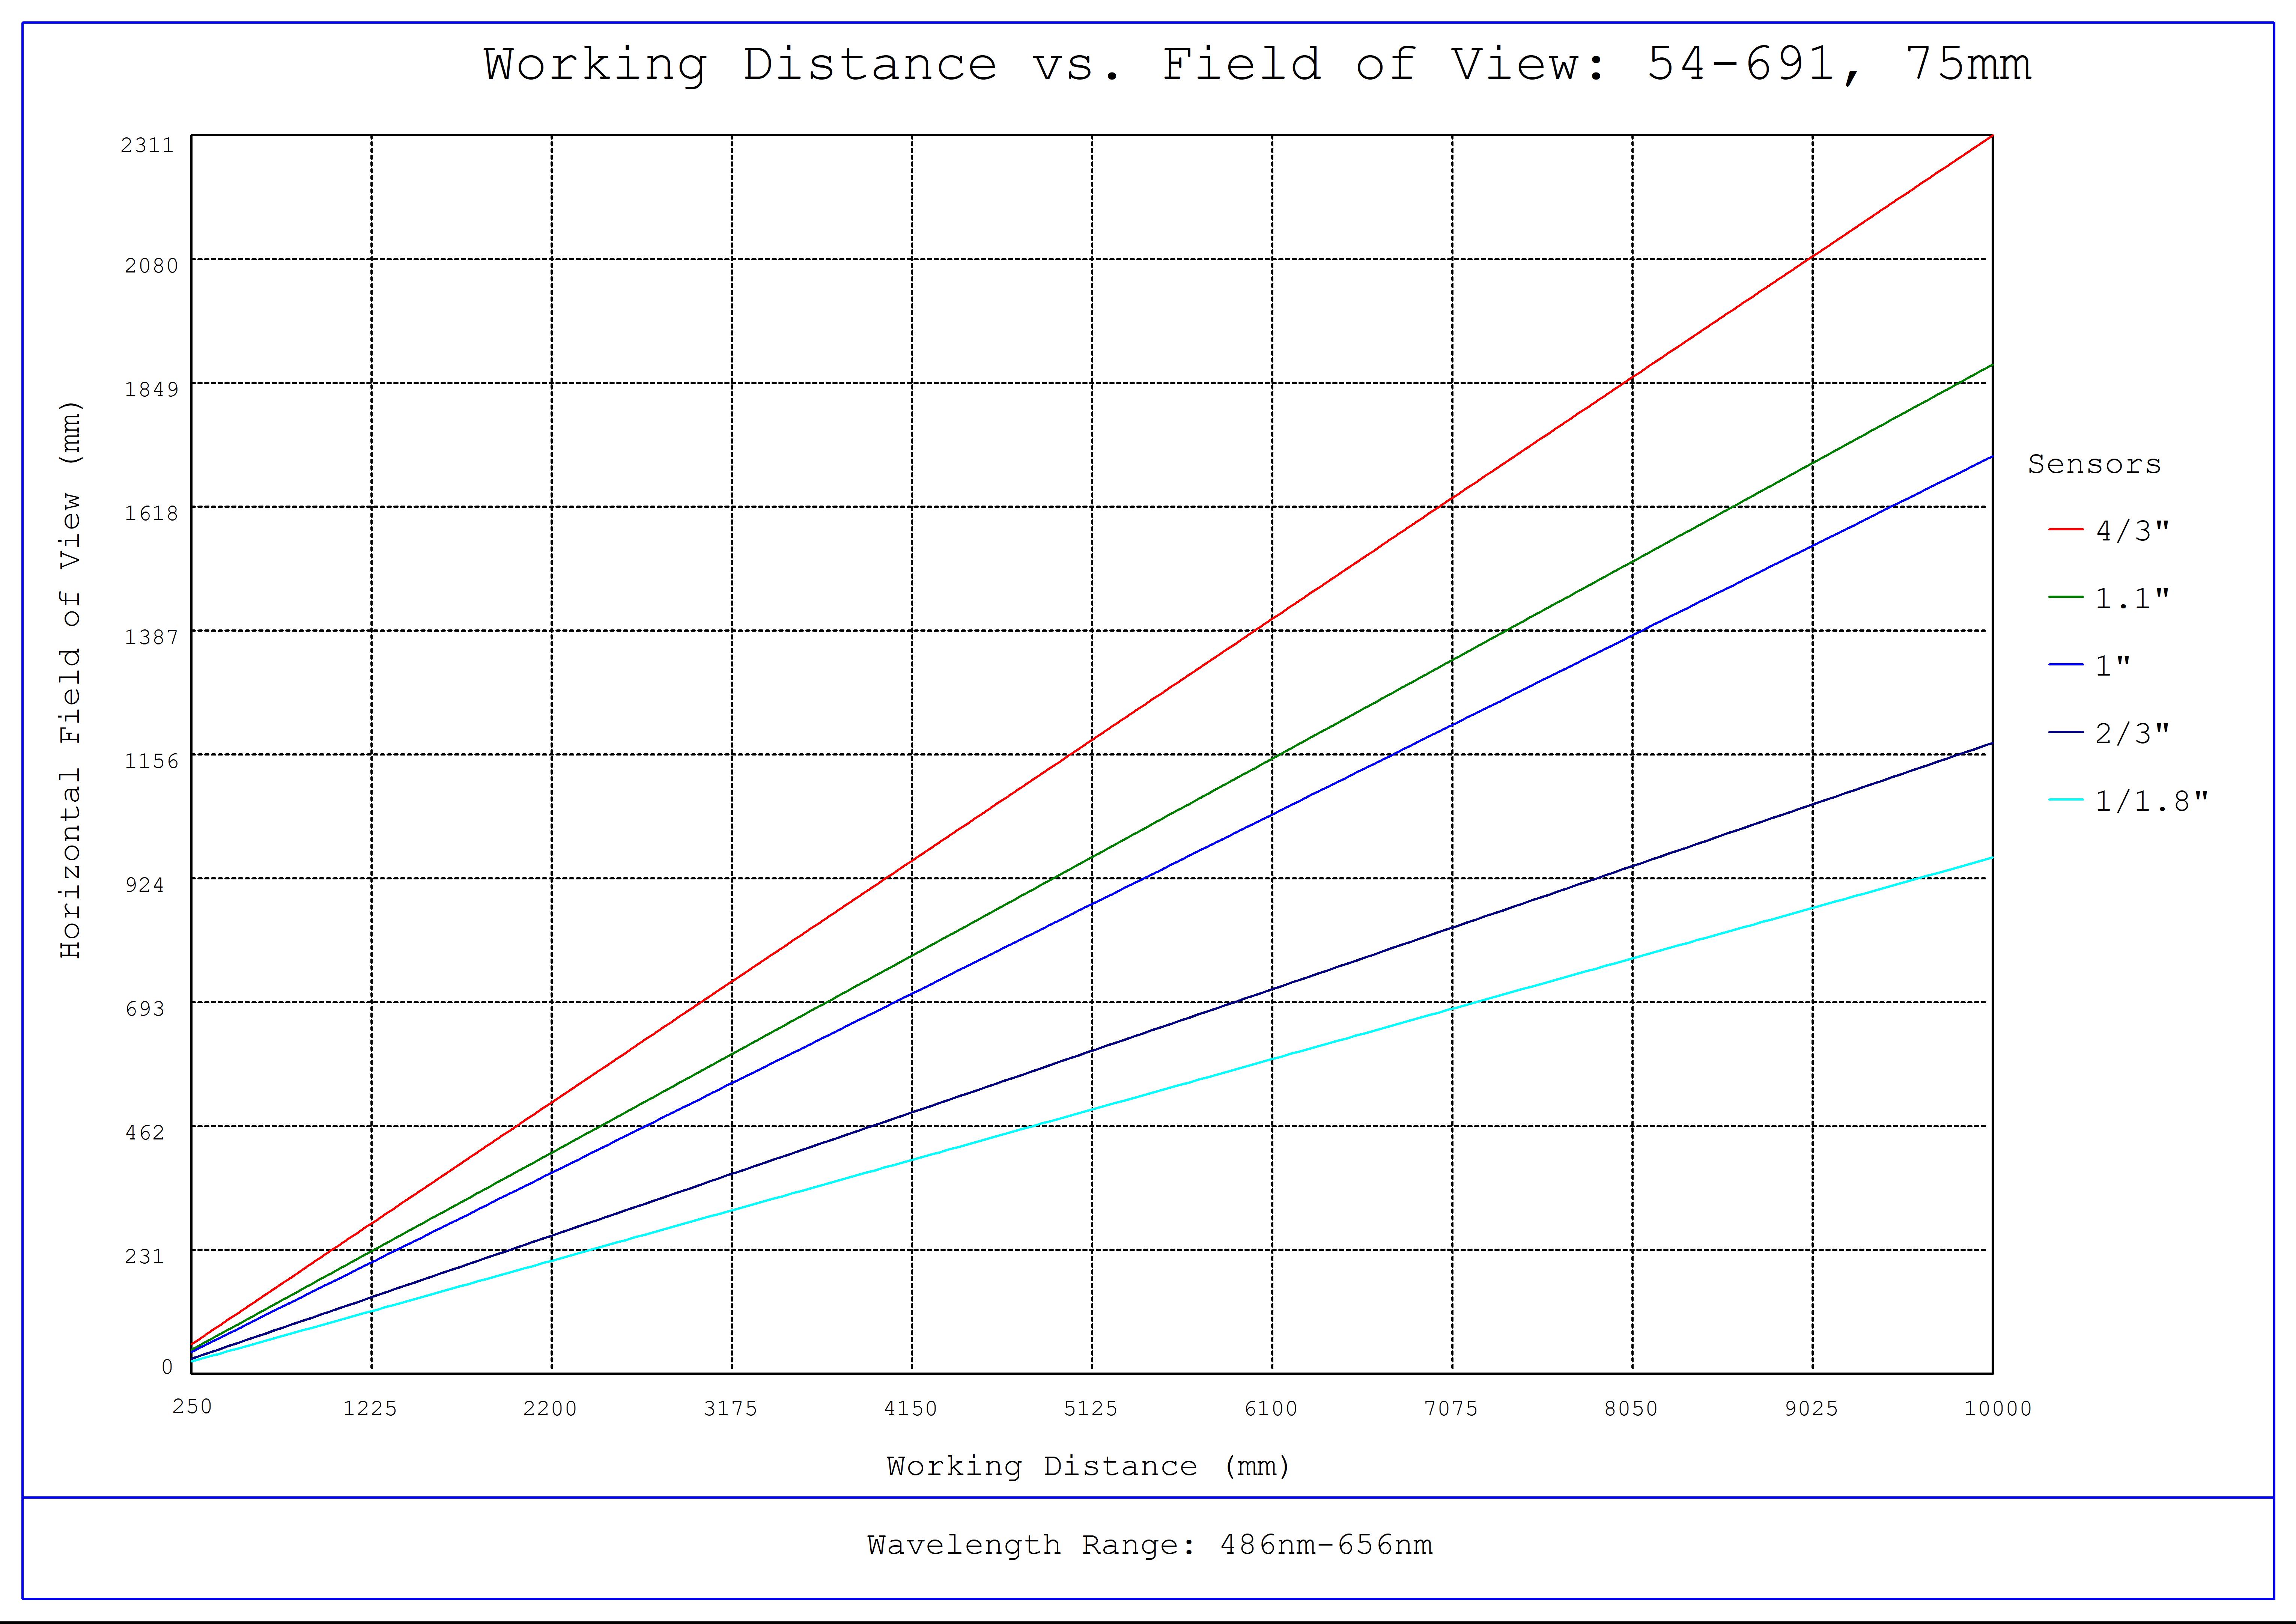 #54-691, 75mm DG Series Fixed Focal Length Lens, Working Distance versus Field of View Plot